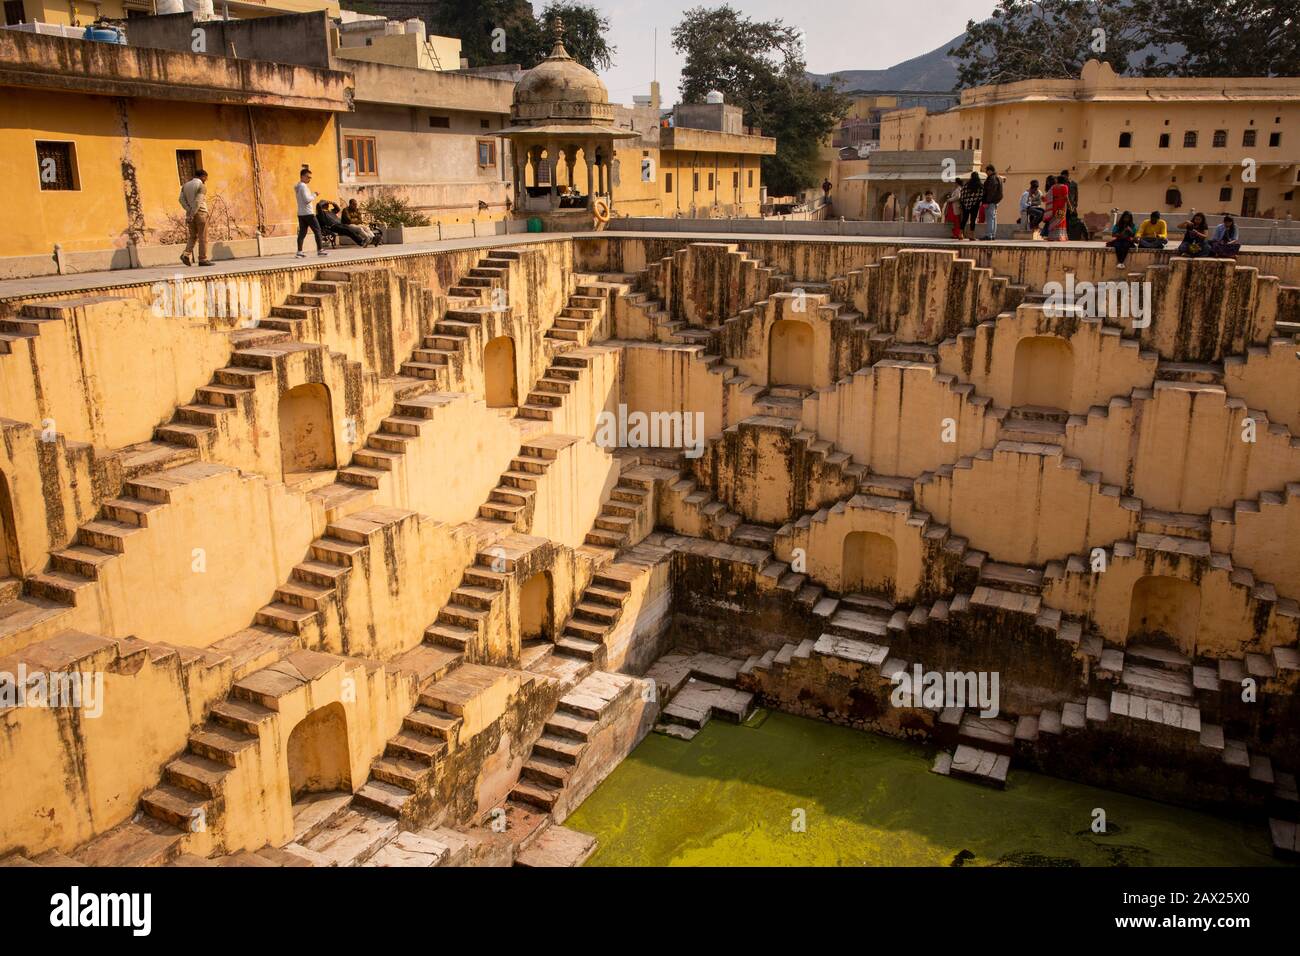 India, Rajasthan, Jaipur, Amber, Panna Meena Ka Kund, C16th baori, step well, geometric symmetrical steps down to water Stock Photo